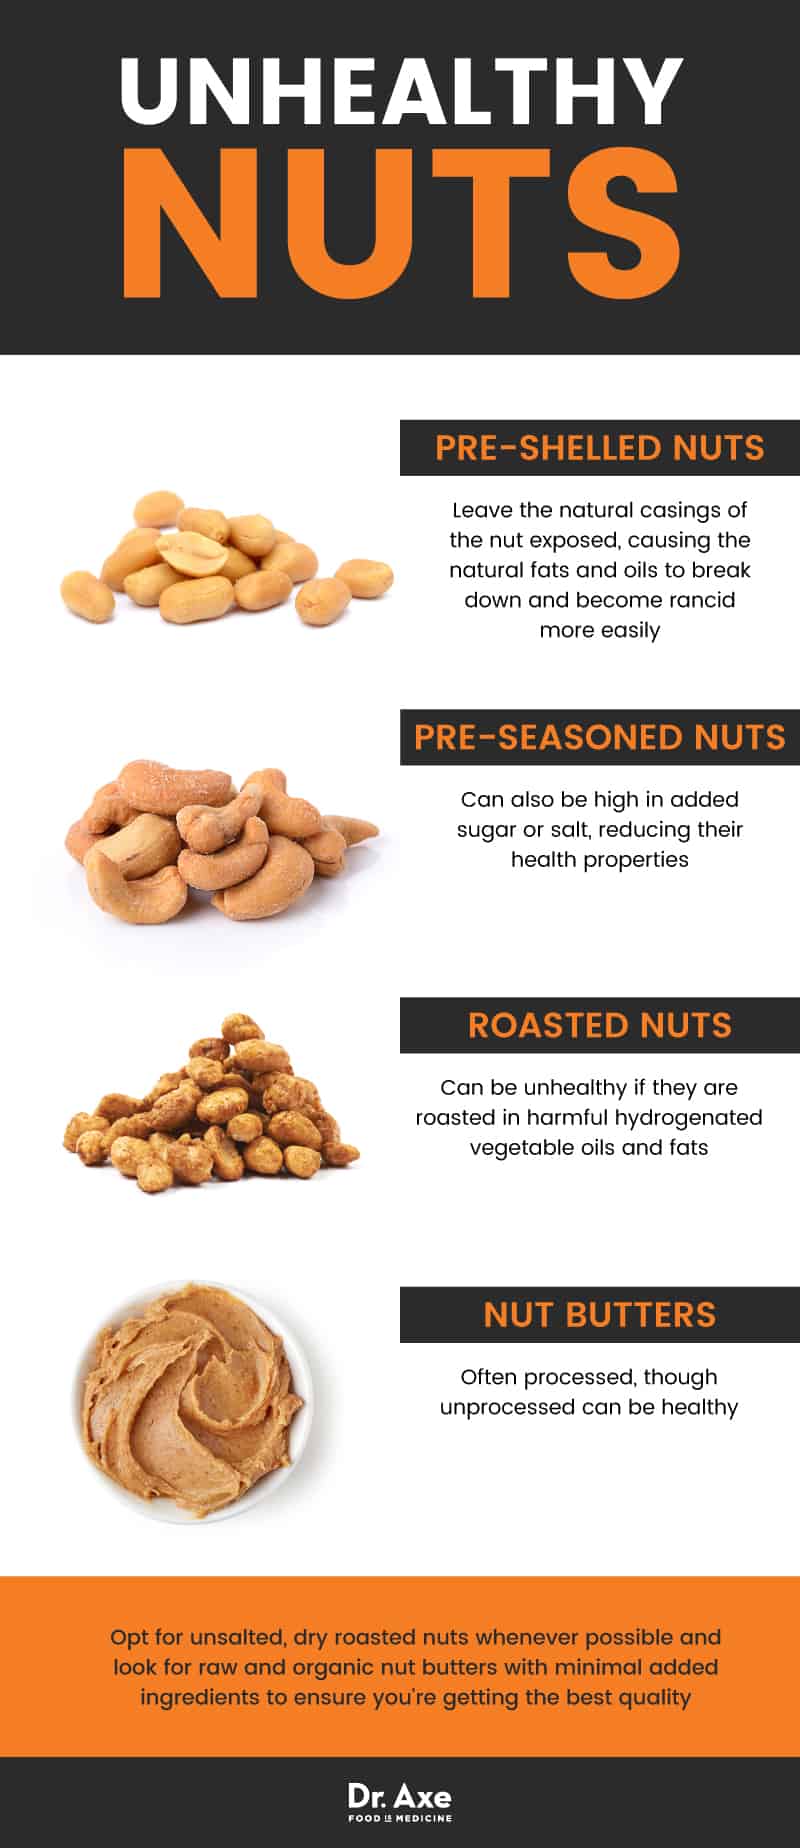 Unhealthy nuts - Dr. Axe